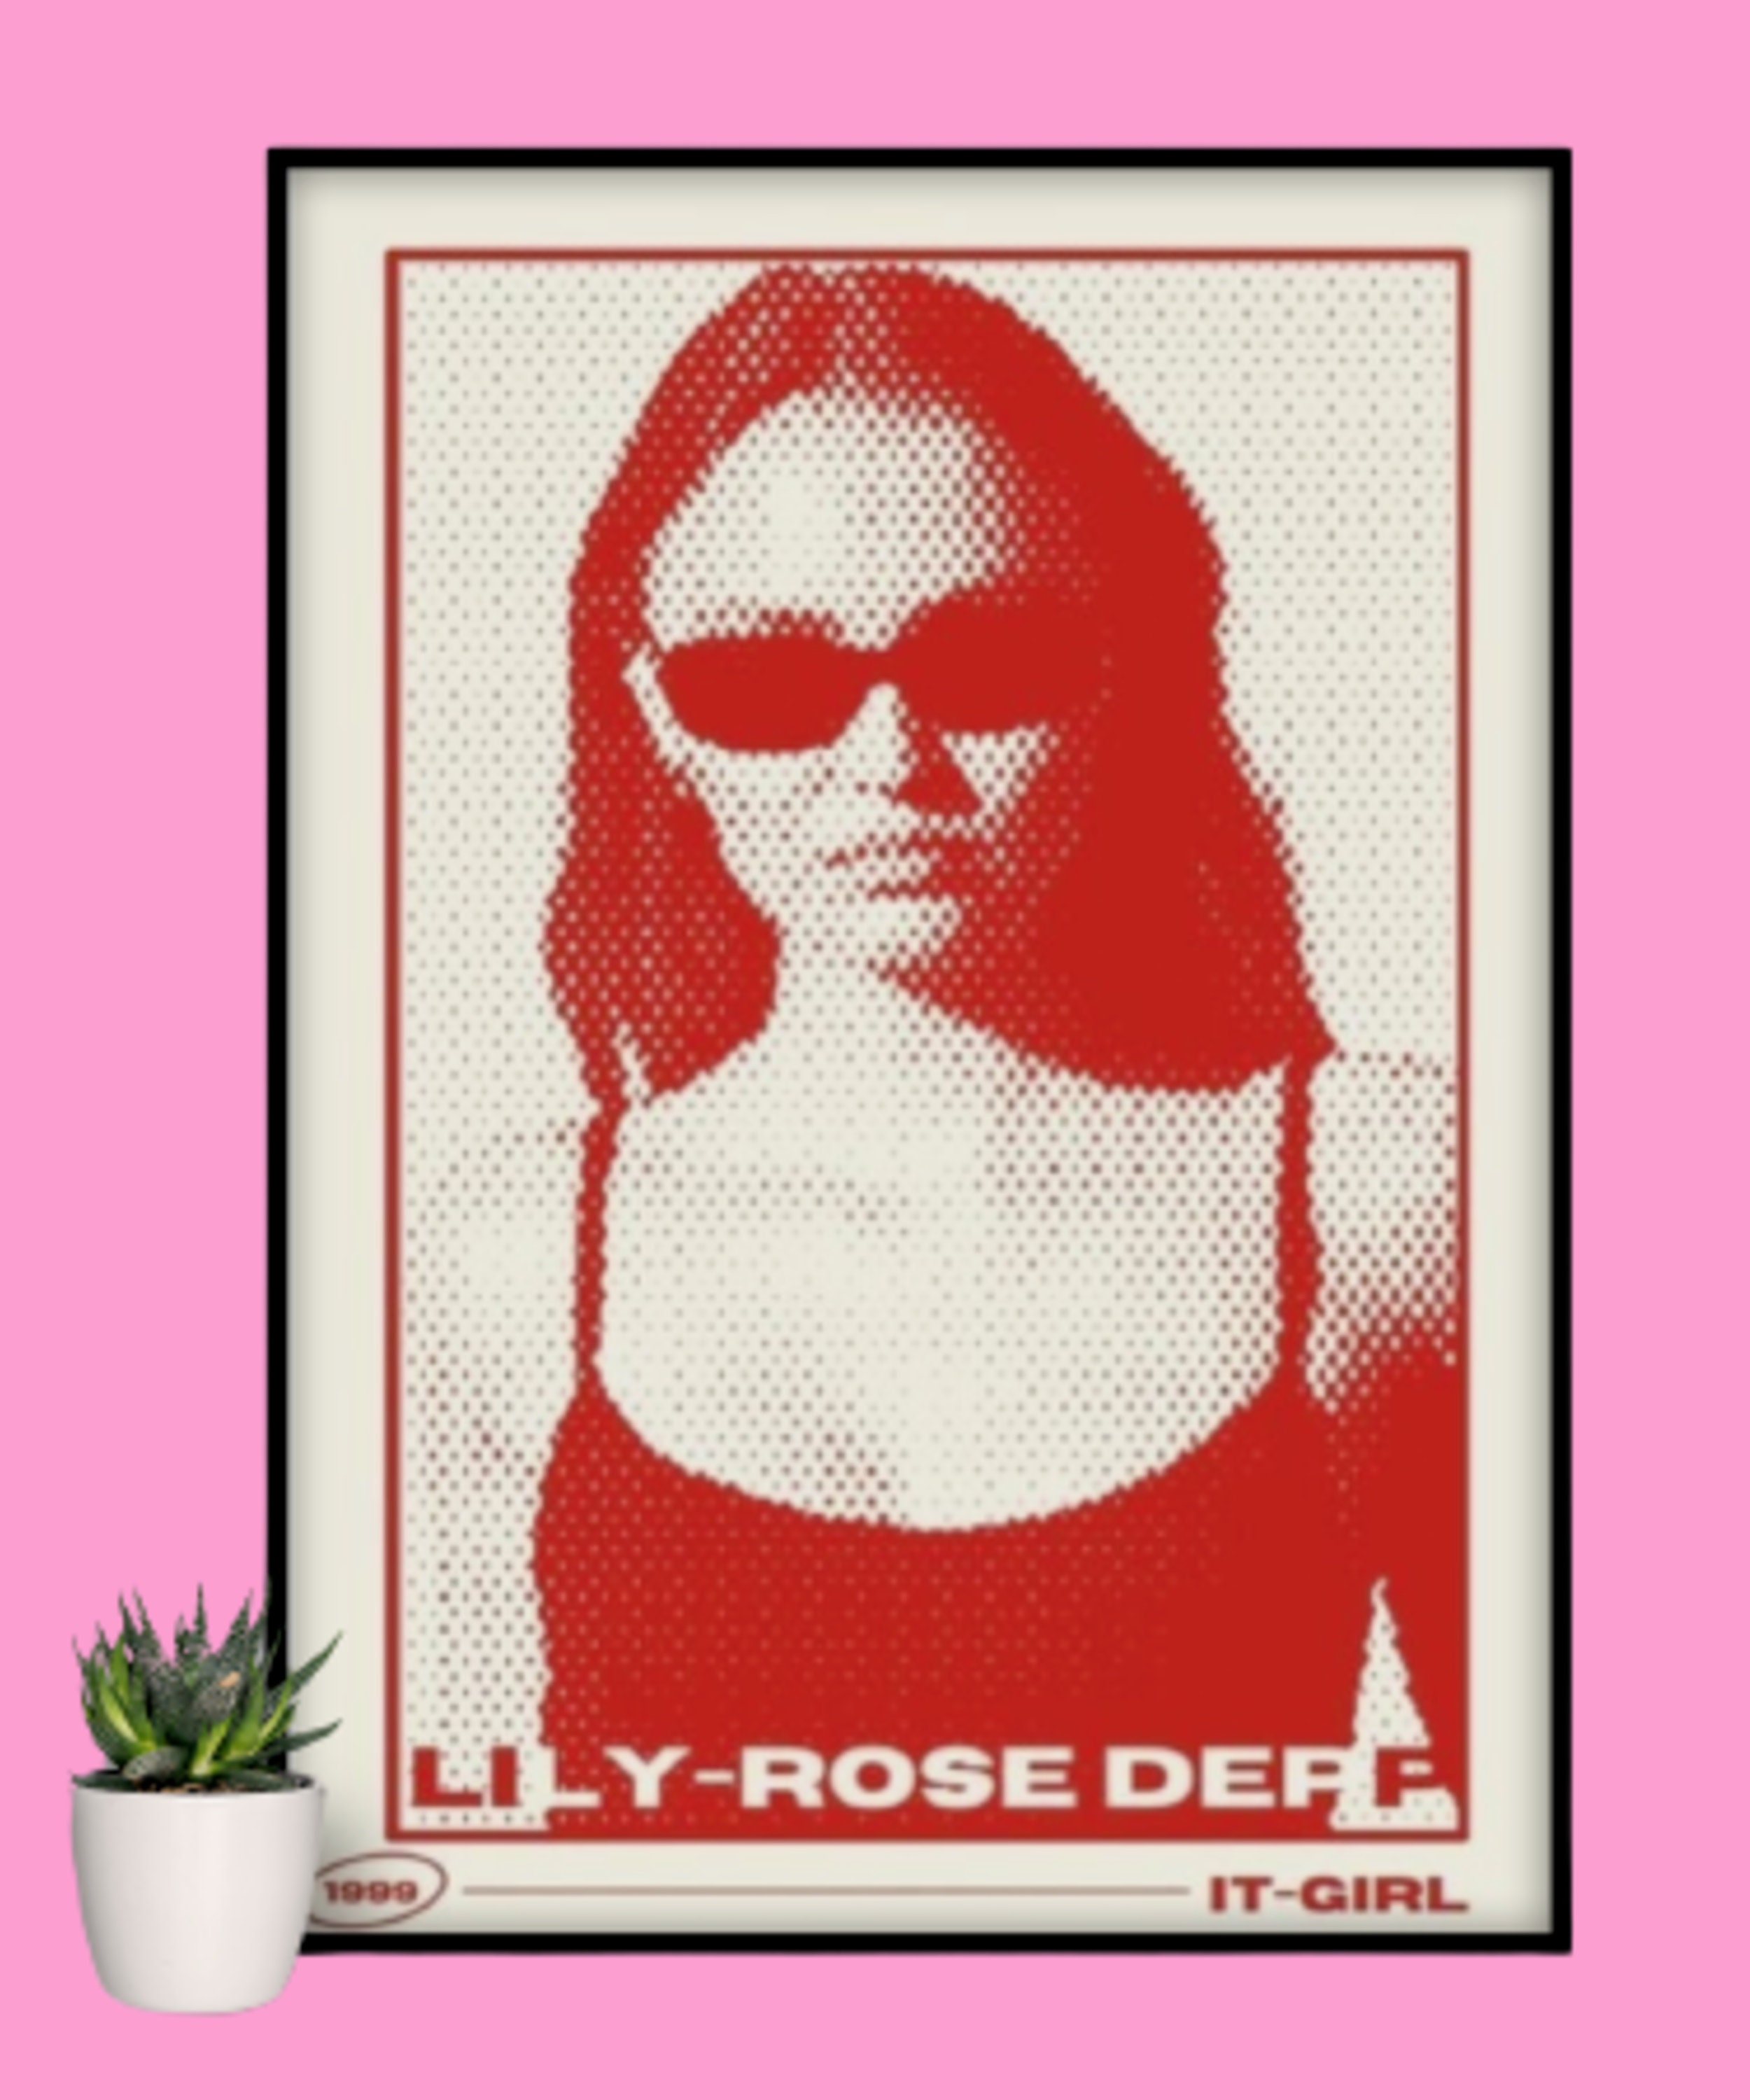 Lily Rose Depp 